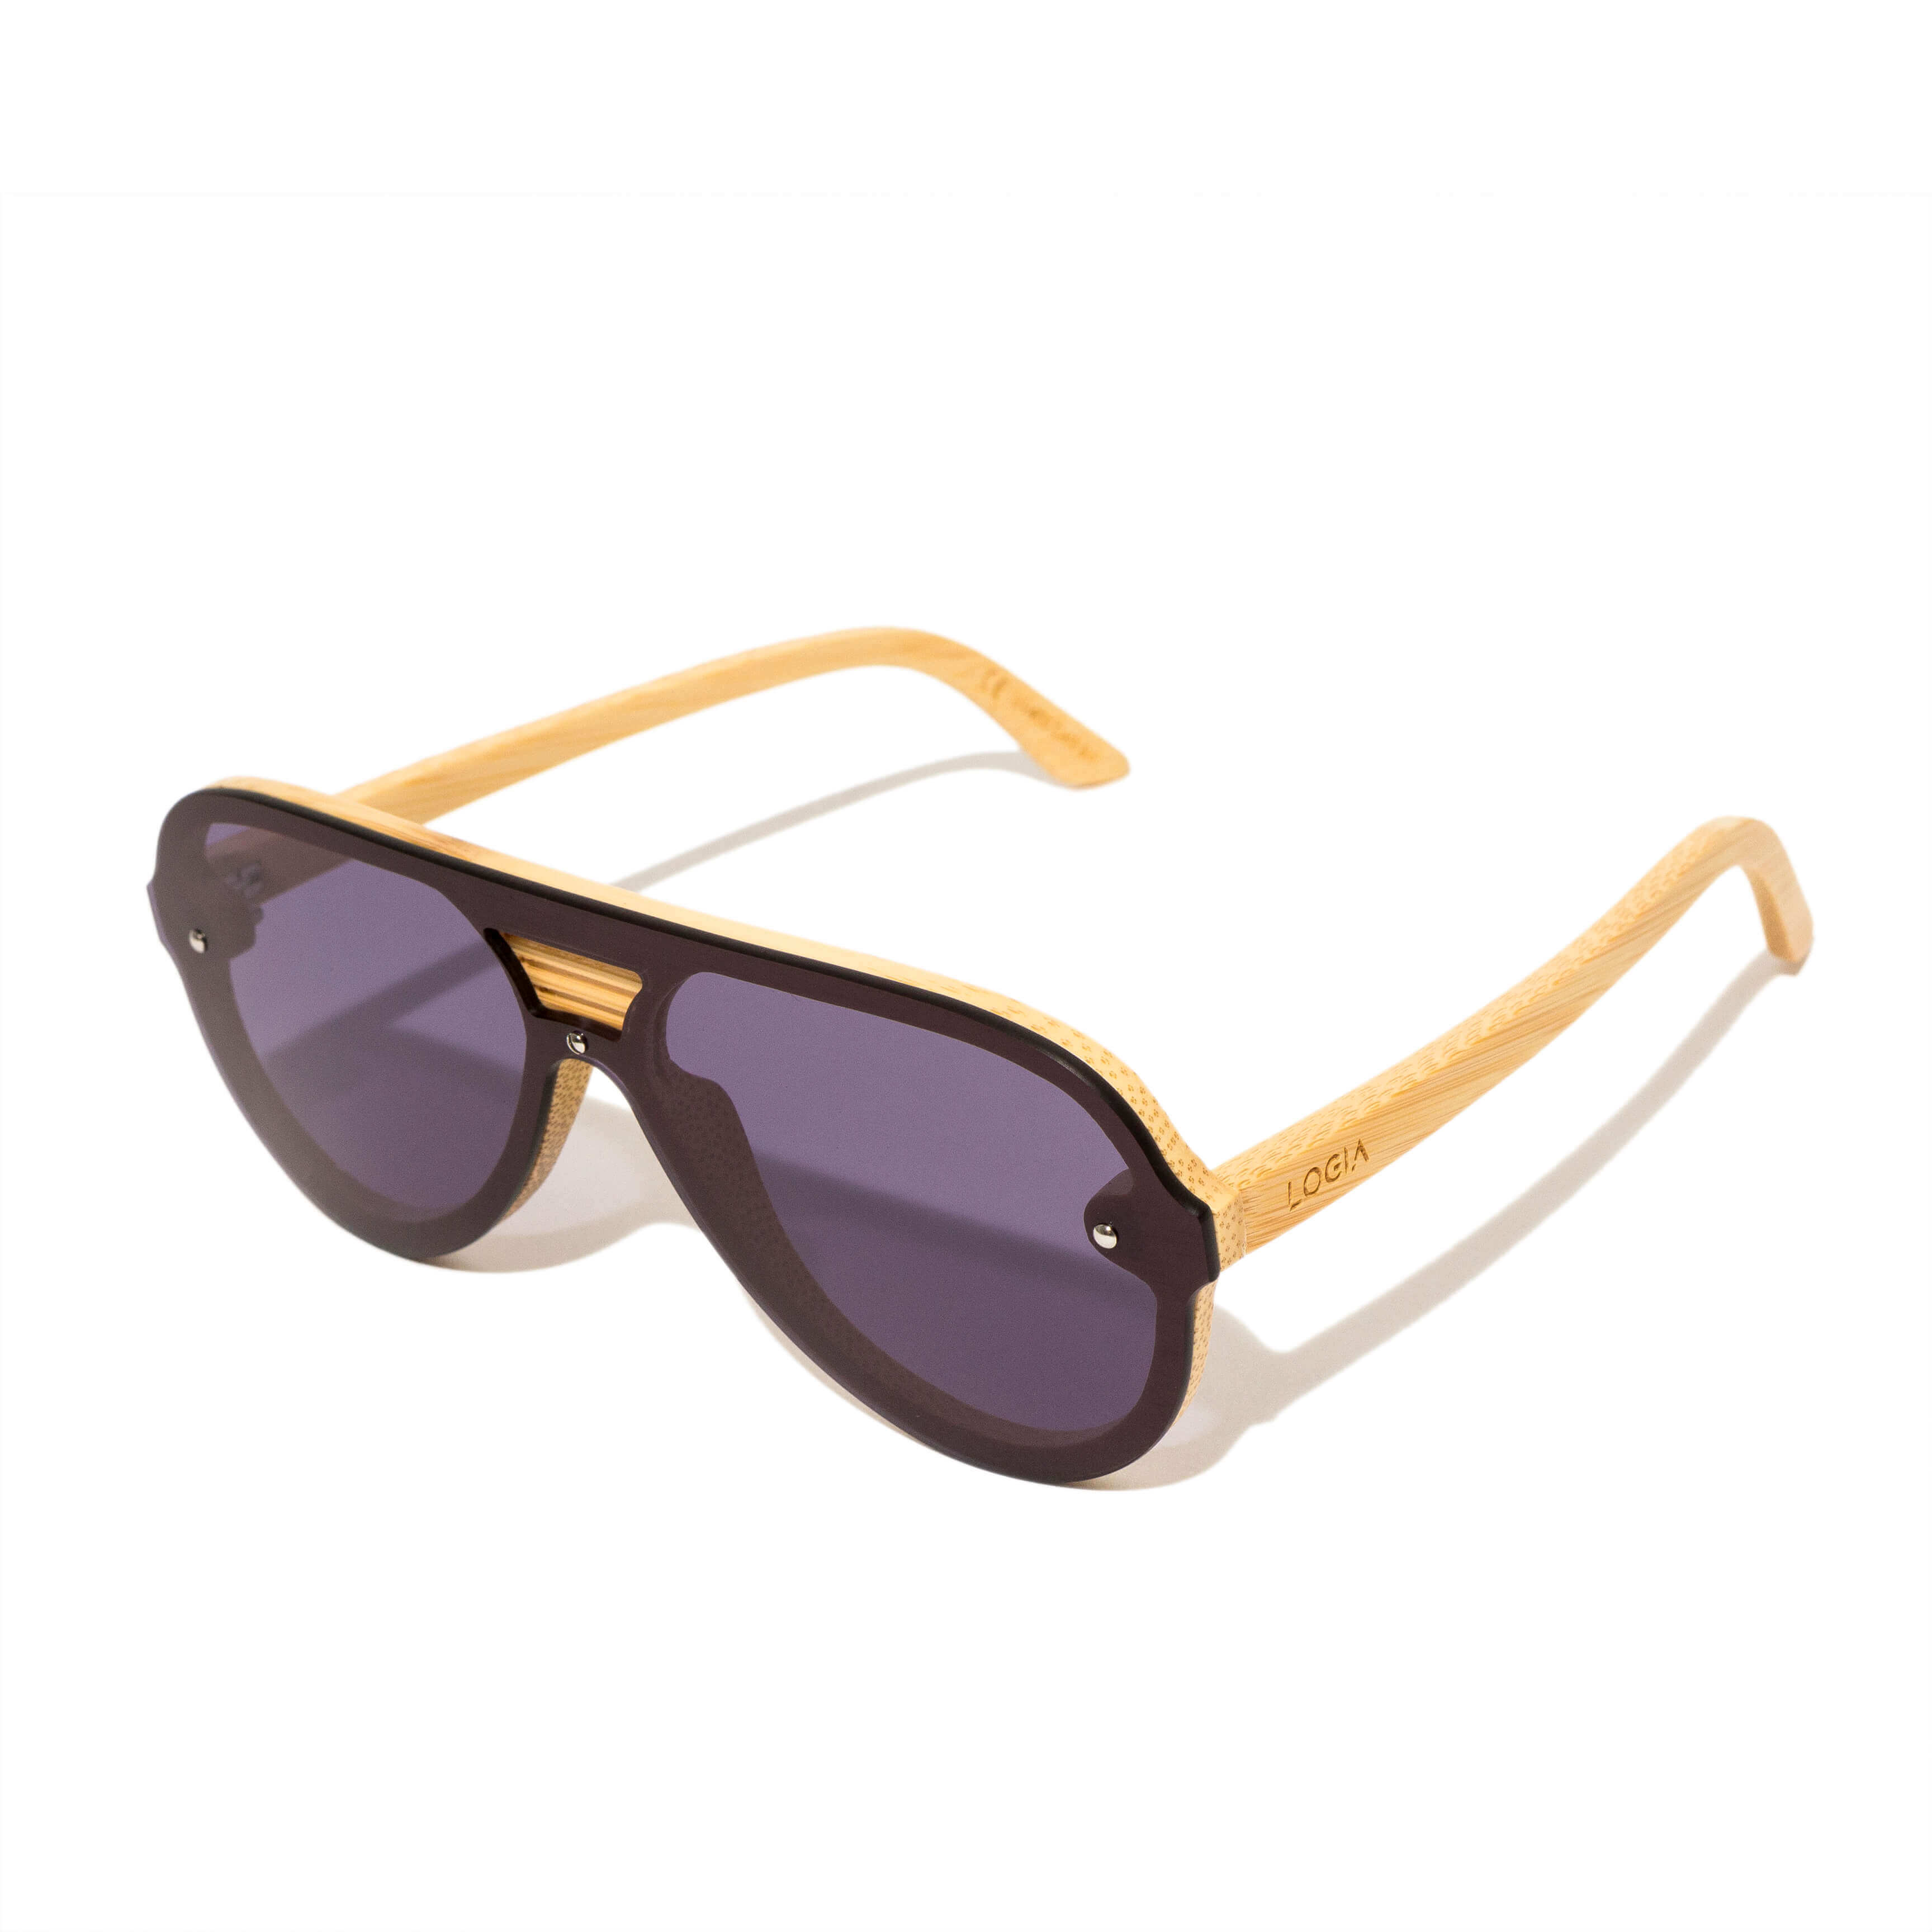 Bamboo sunglasses Logia Lifestyle Victory